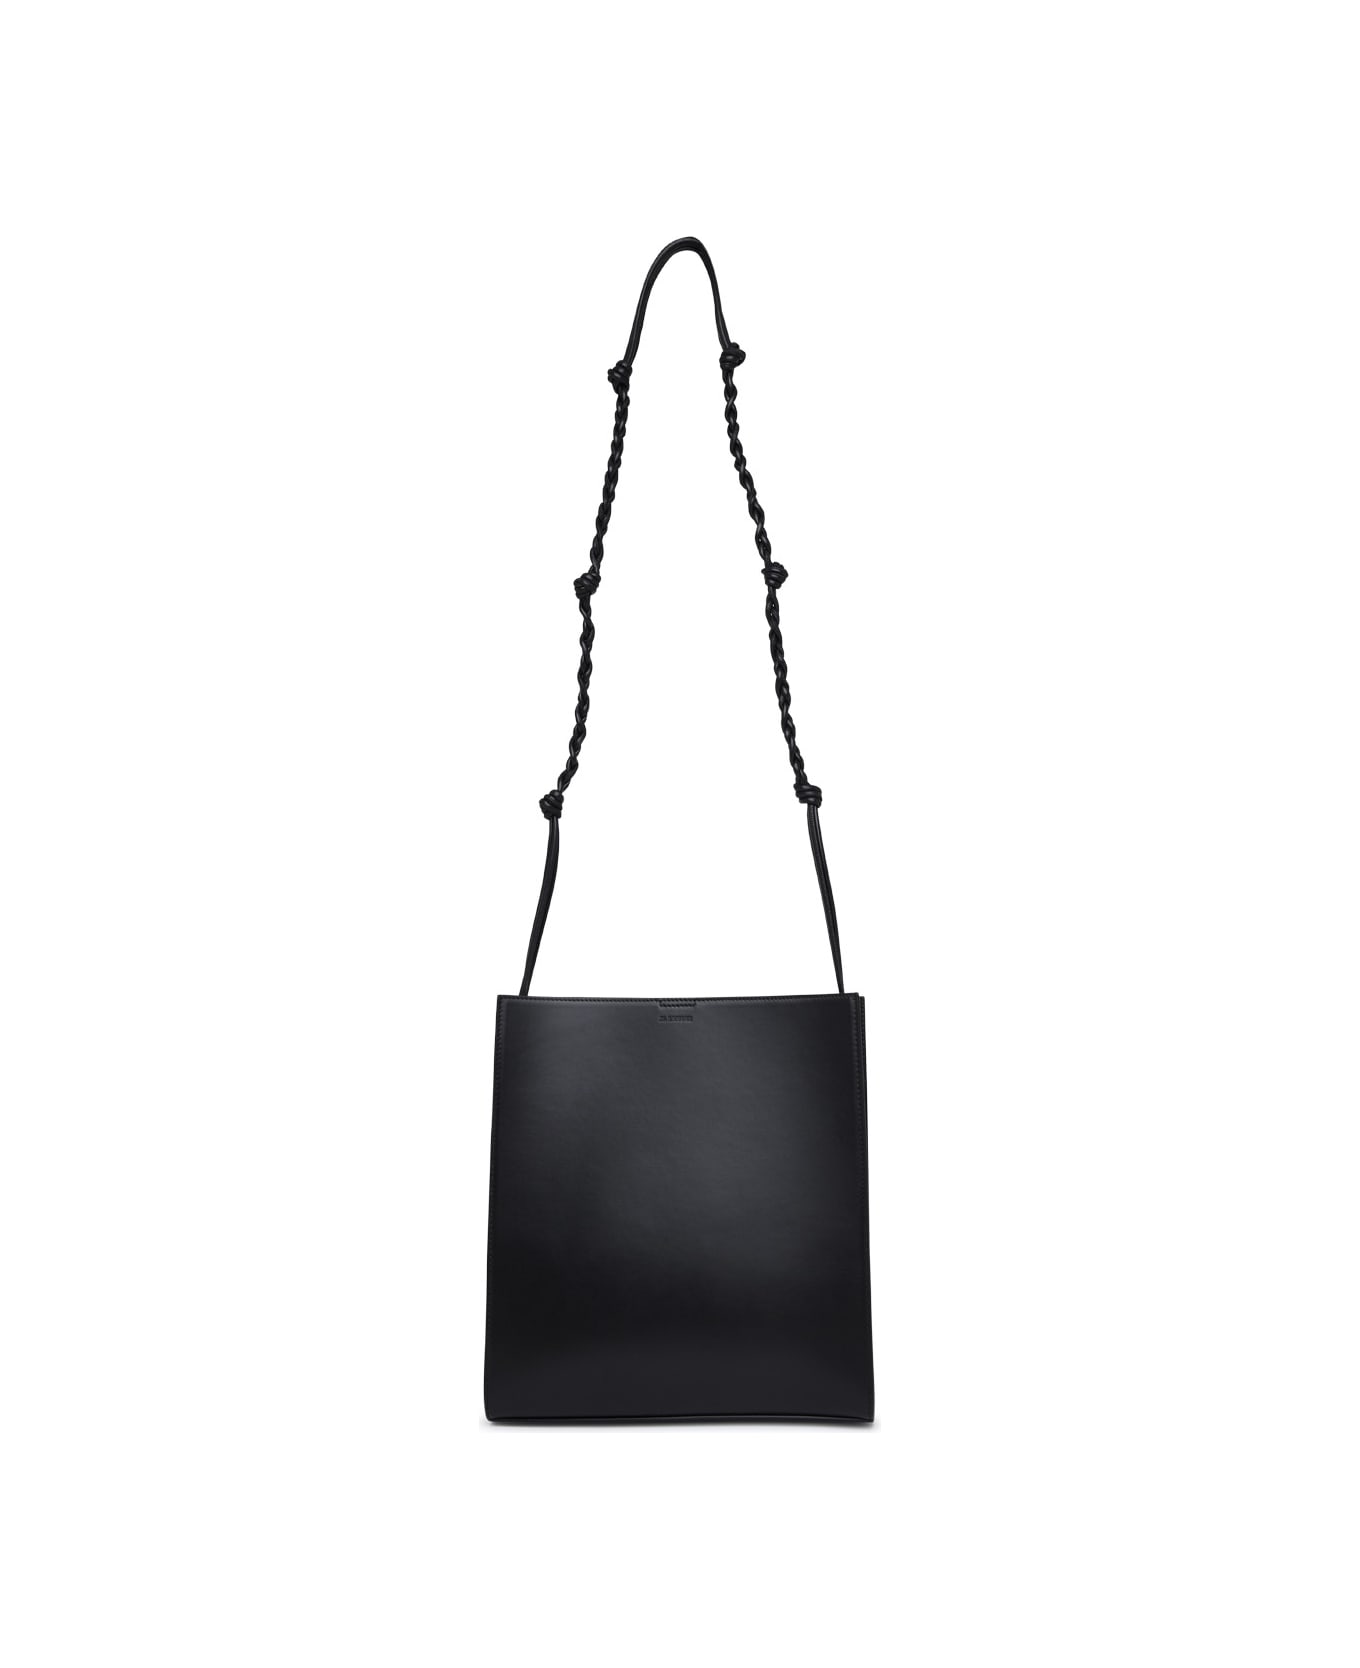 Jil Sander Medium Tangle Bag In Black Leather - Black